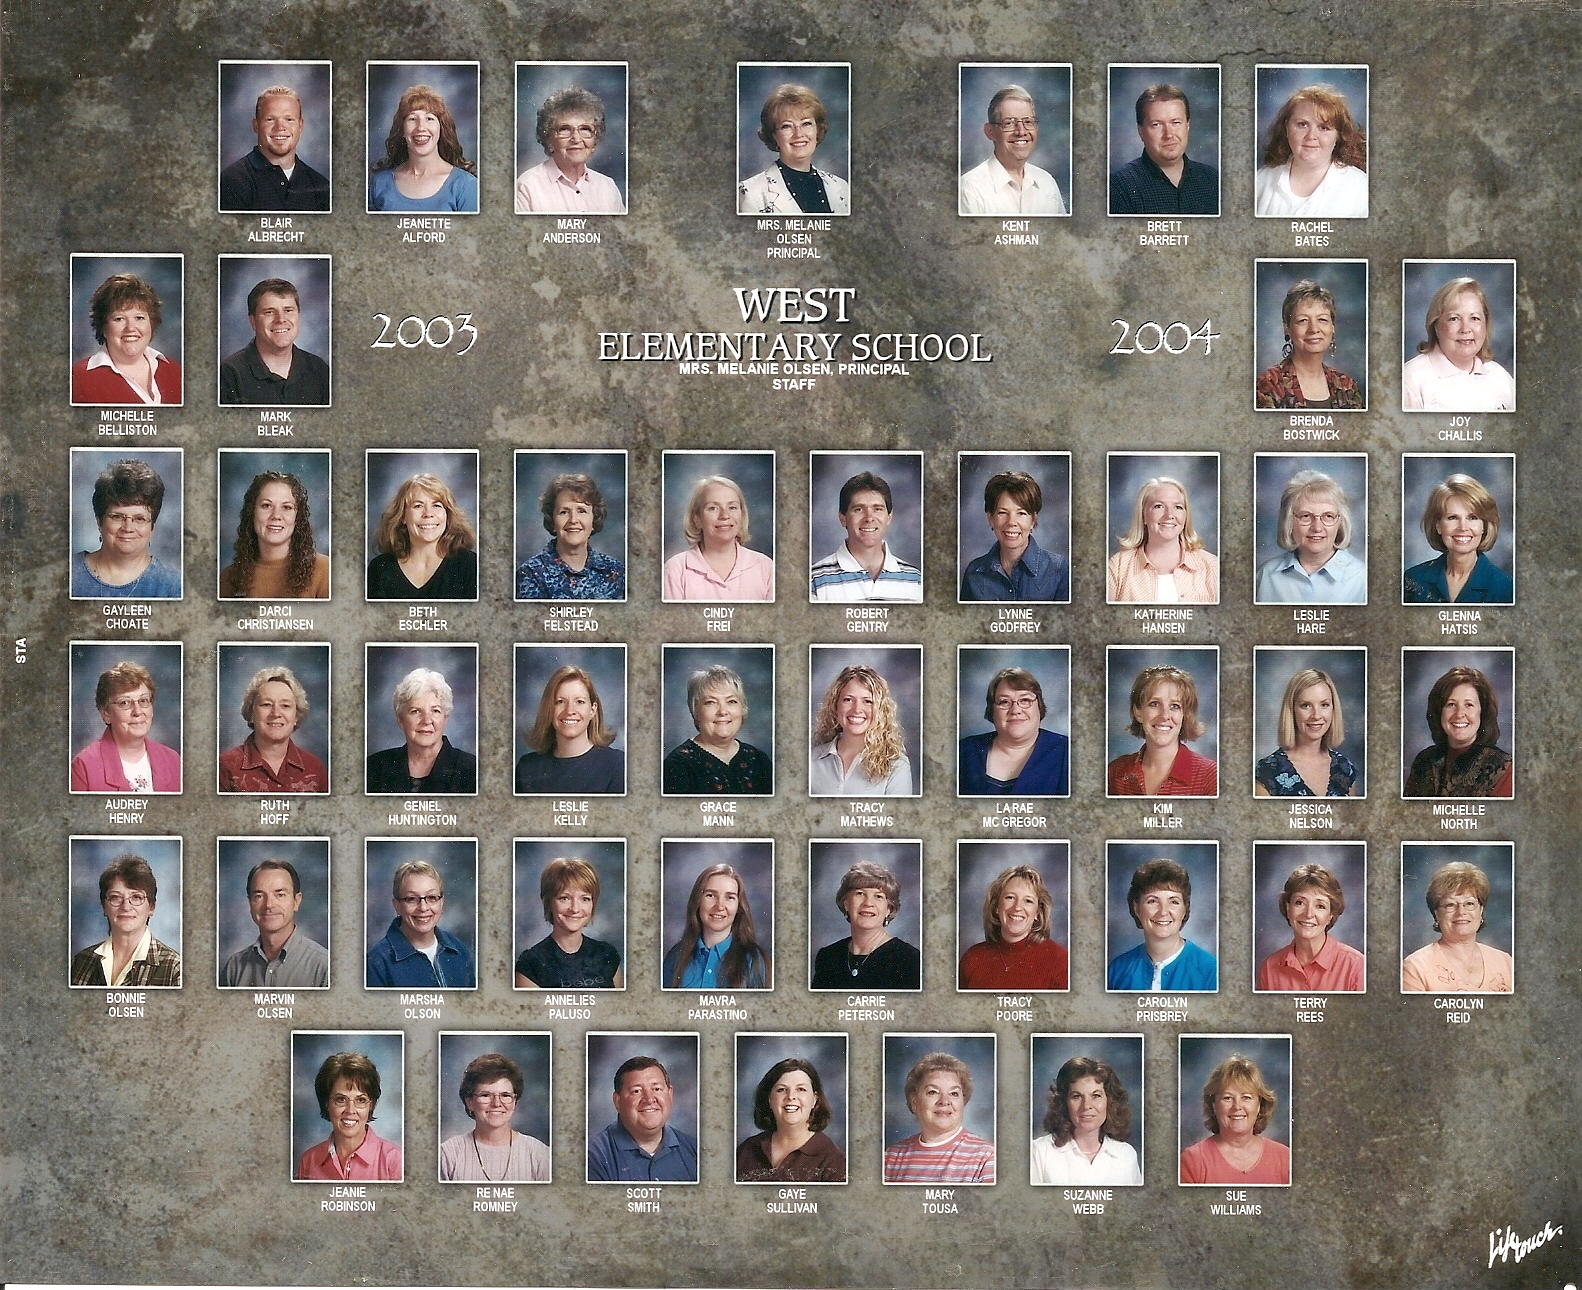 WCHS-00259 West Elementary School 2003-2004 Faculty